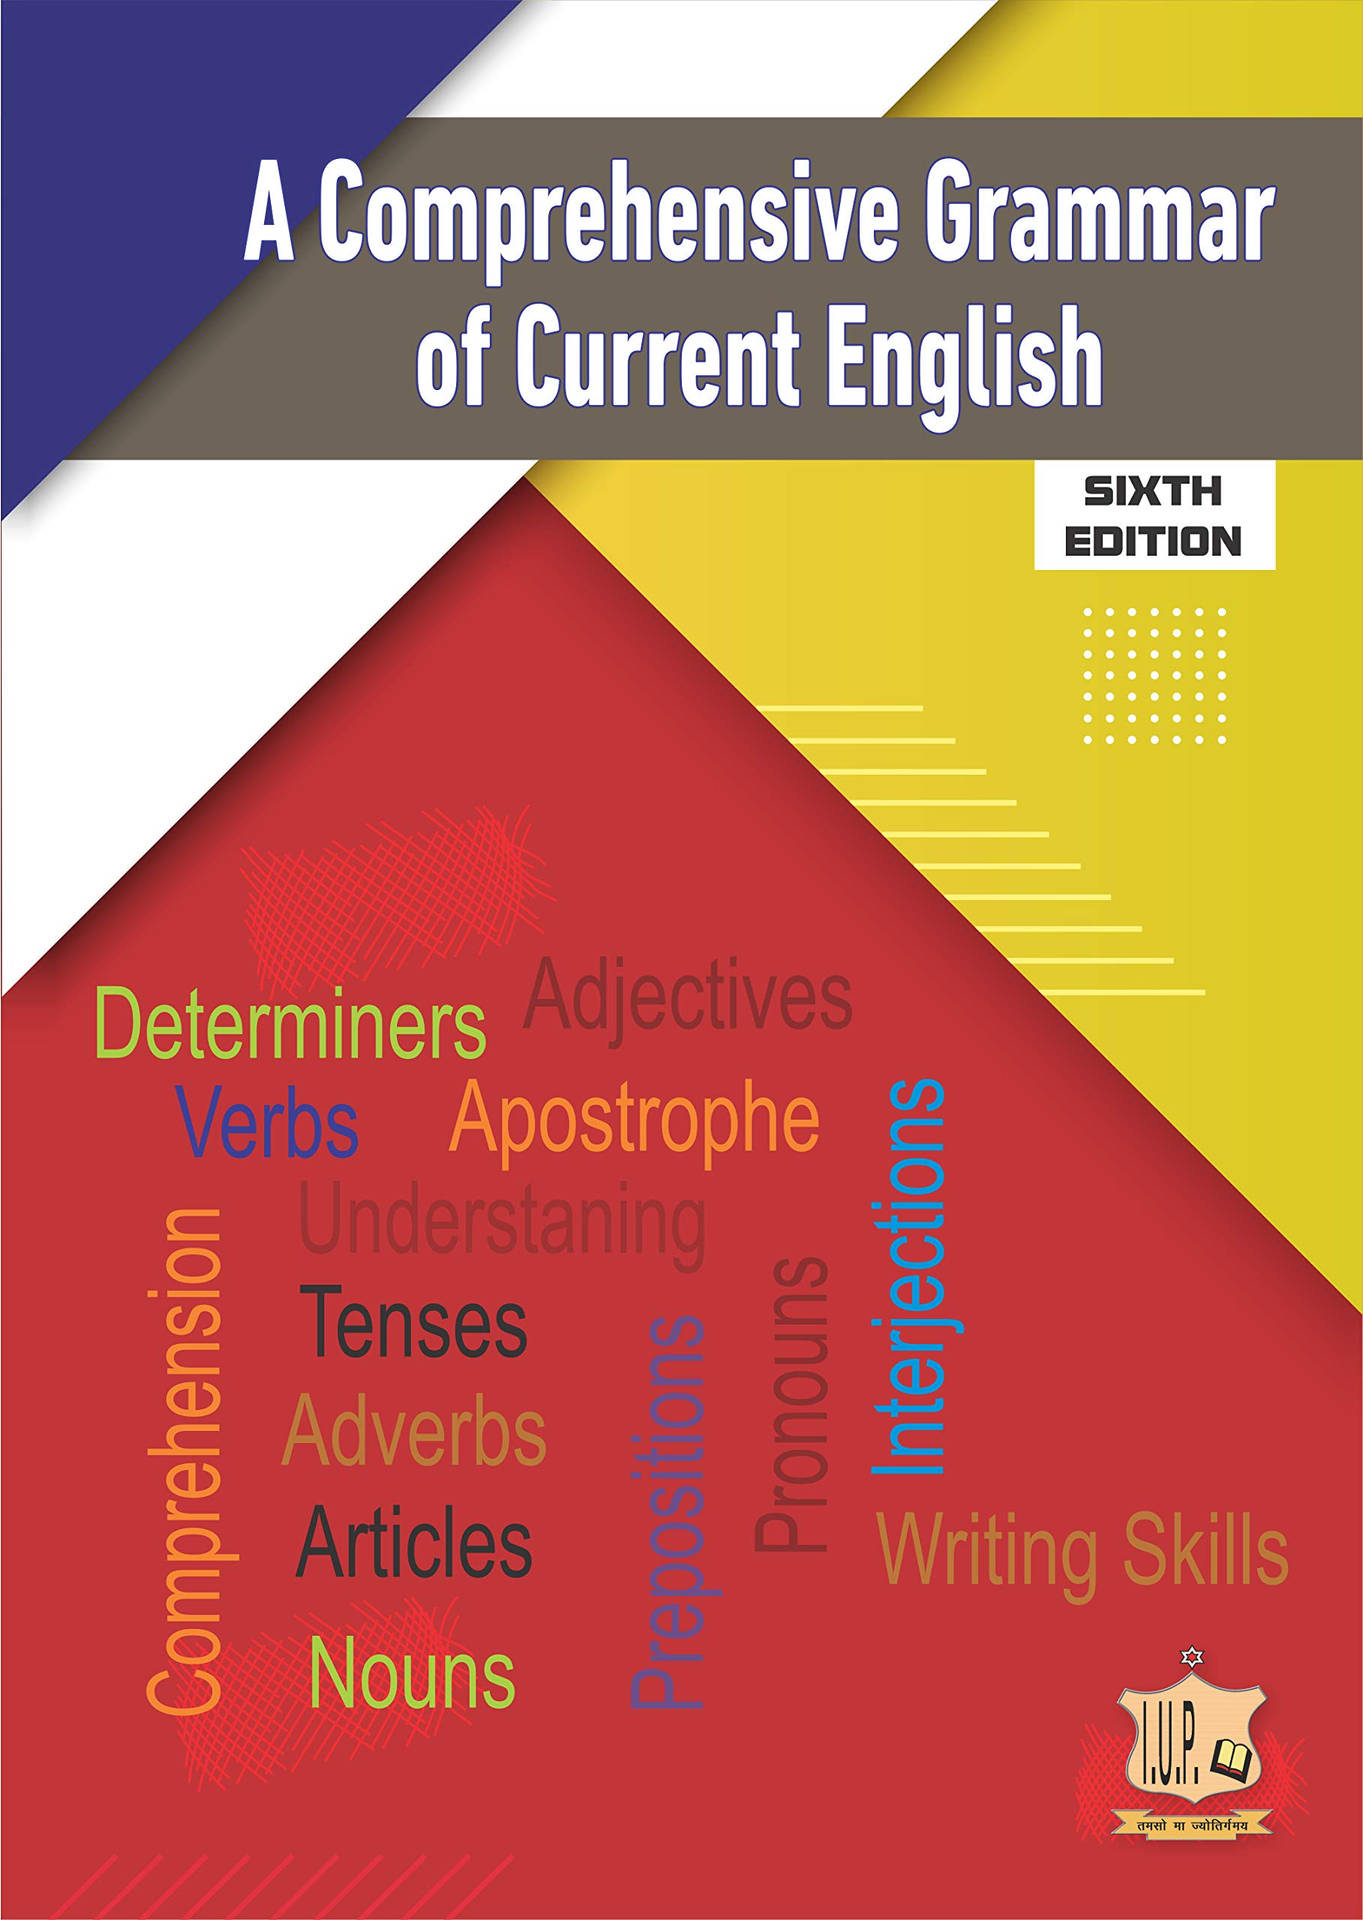 Comprehensive Grammar Book Wallpaper